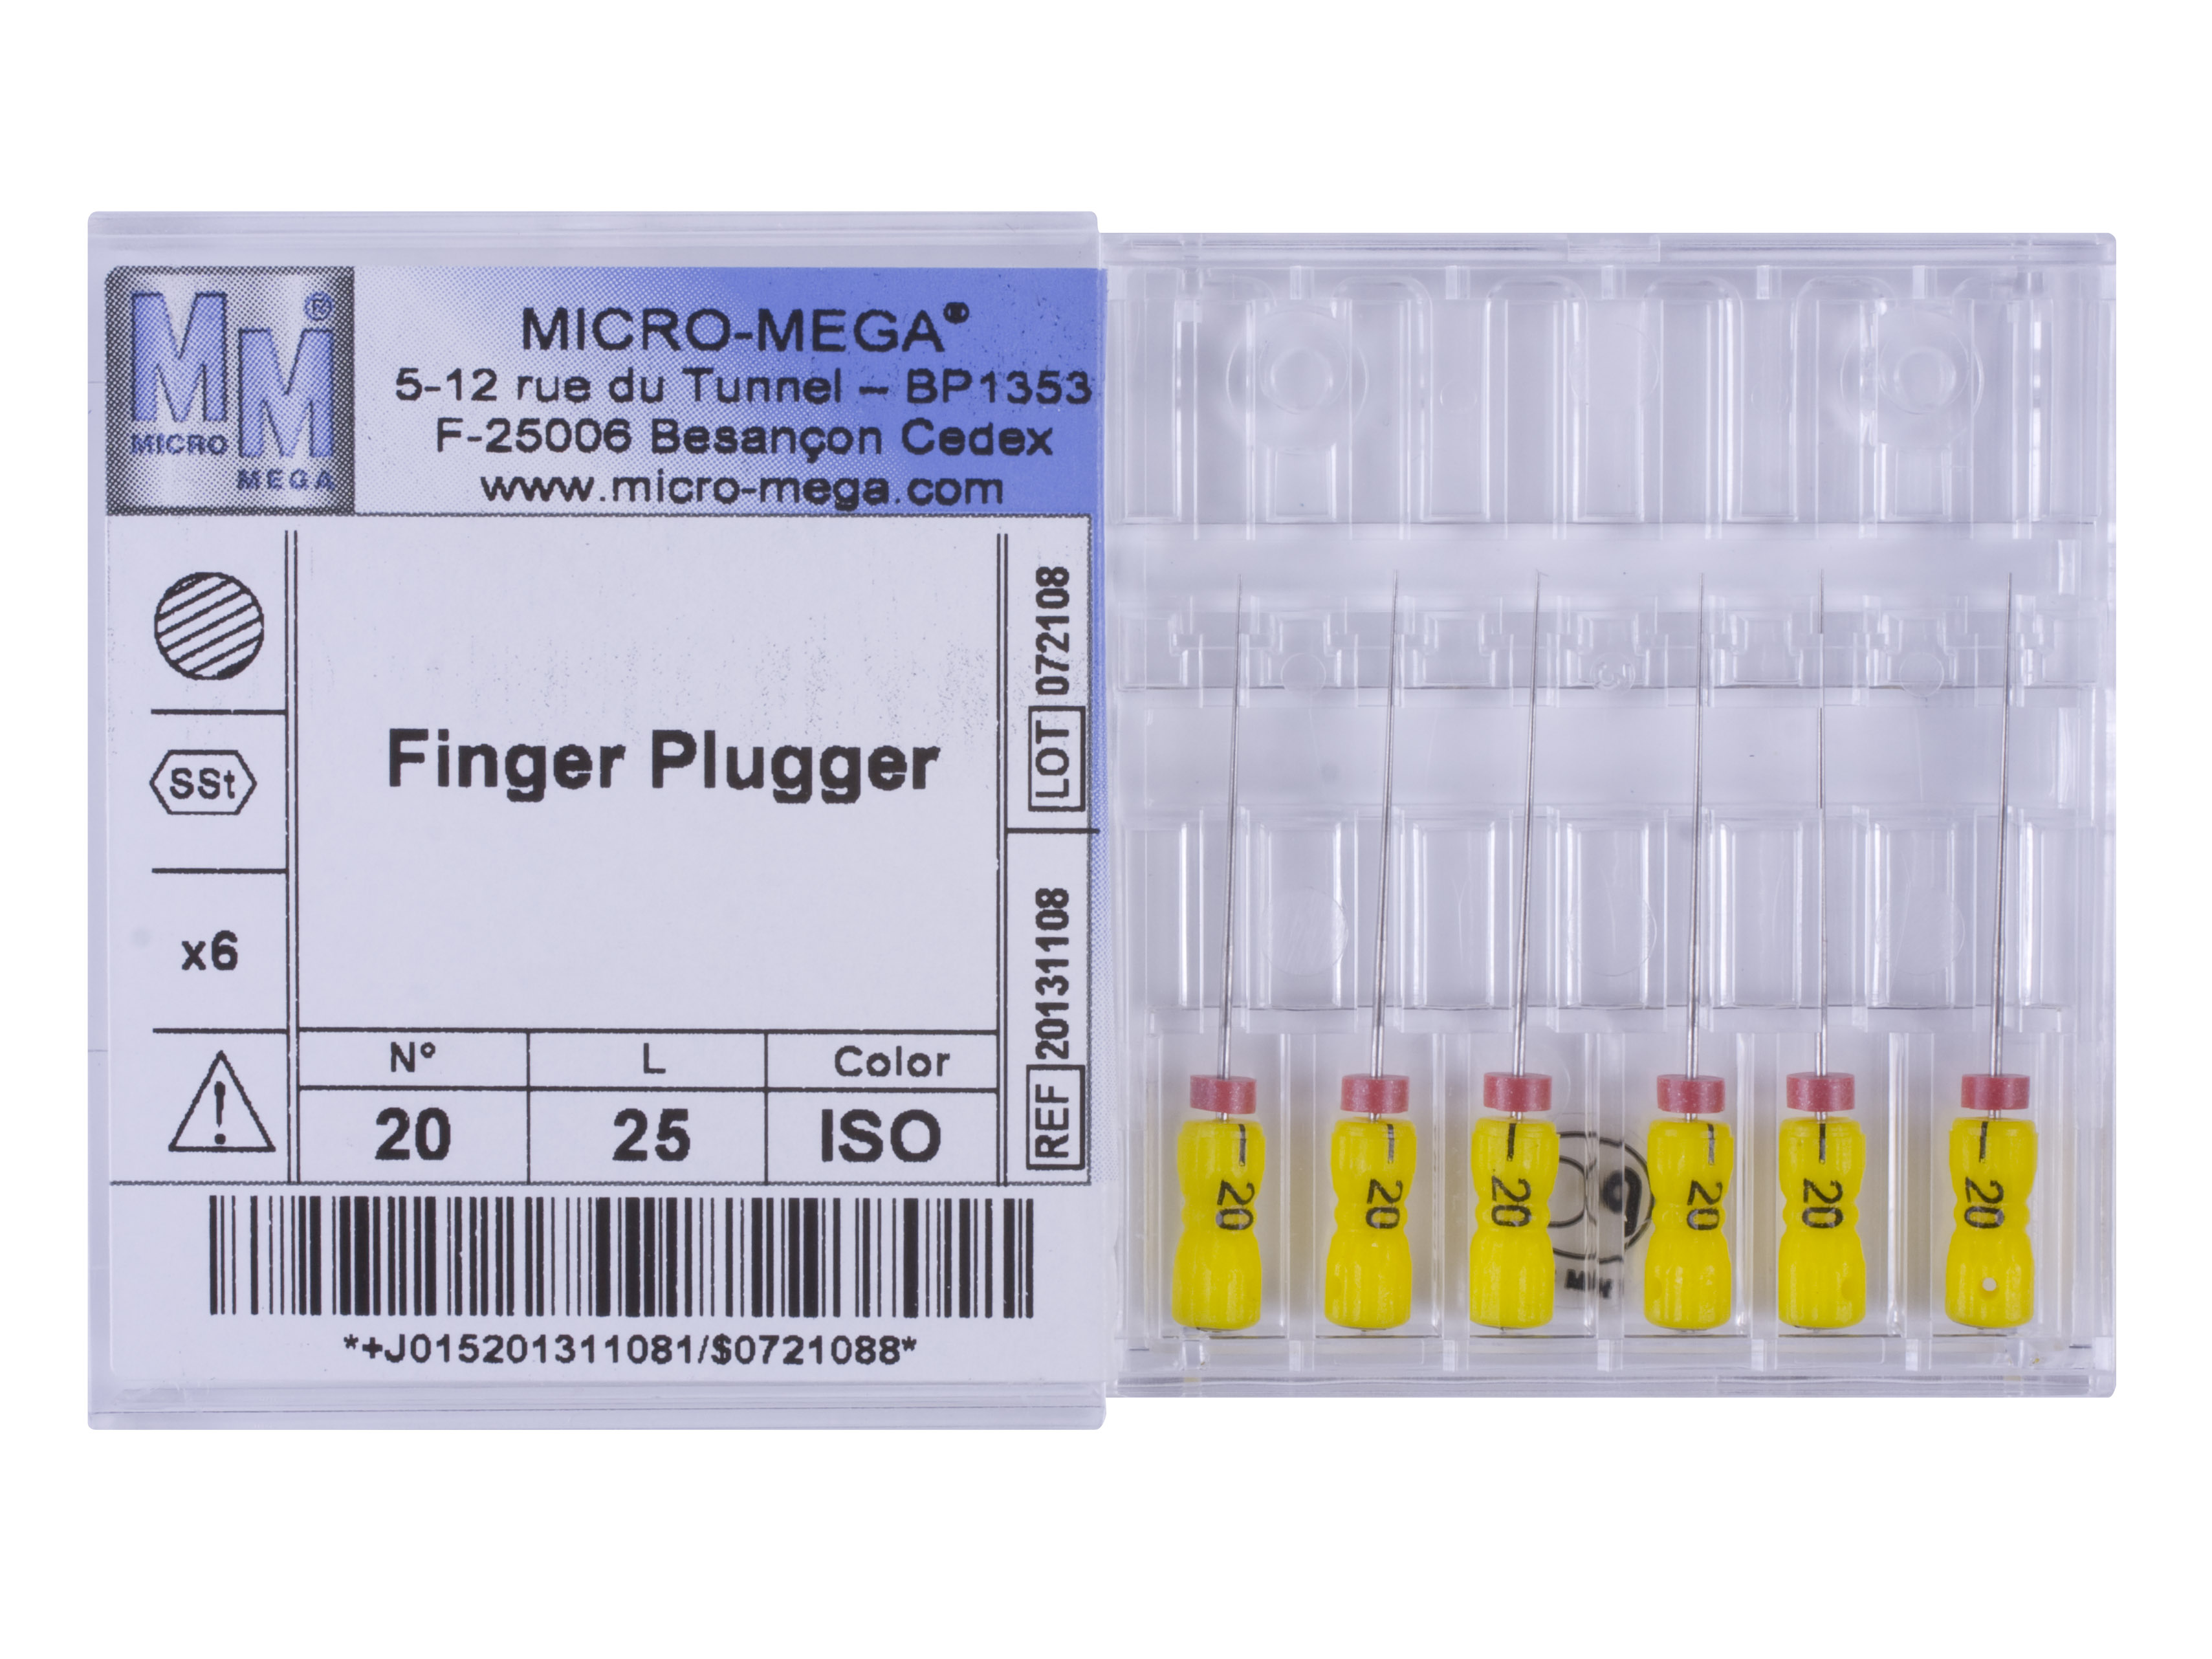 Finger Plugger n20 L25 2% (steel) - инструменты эндодонтические